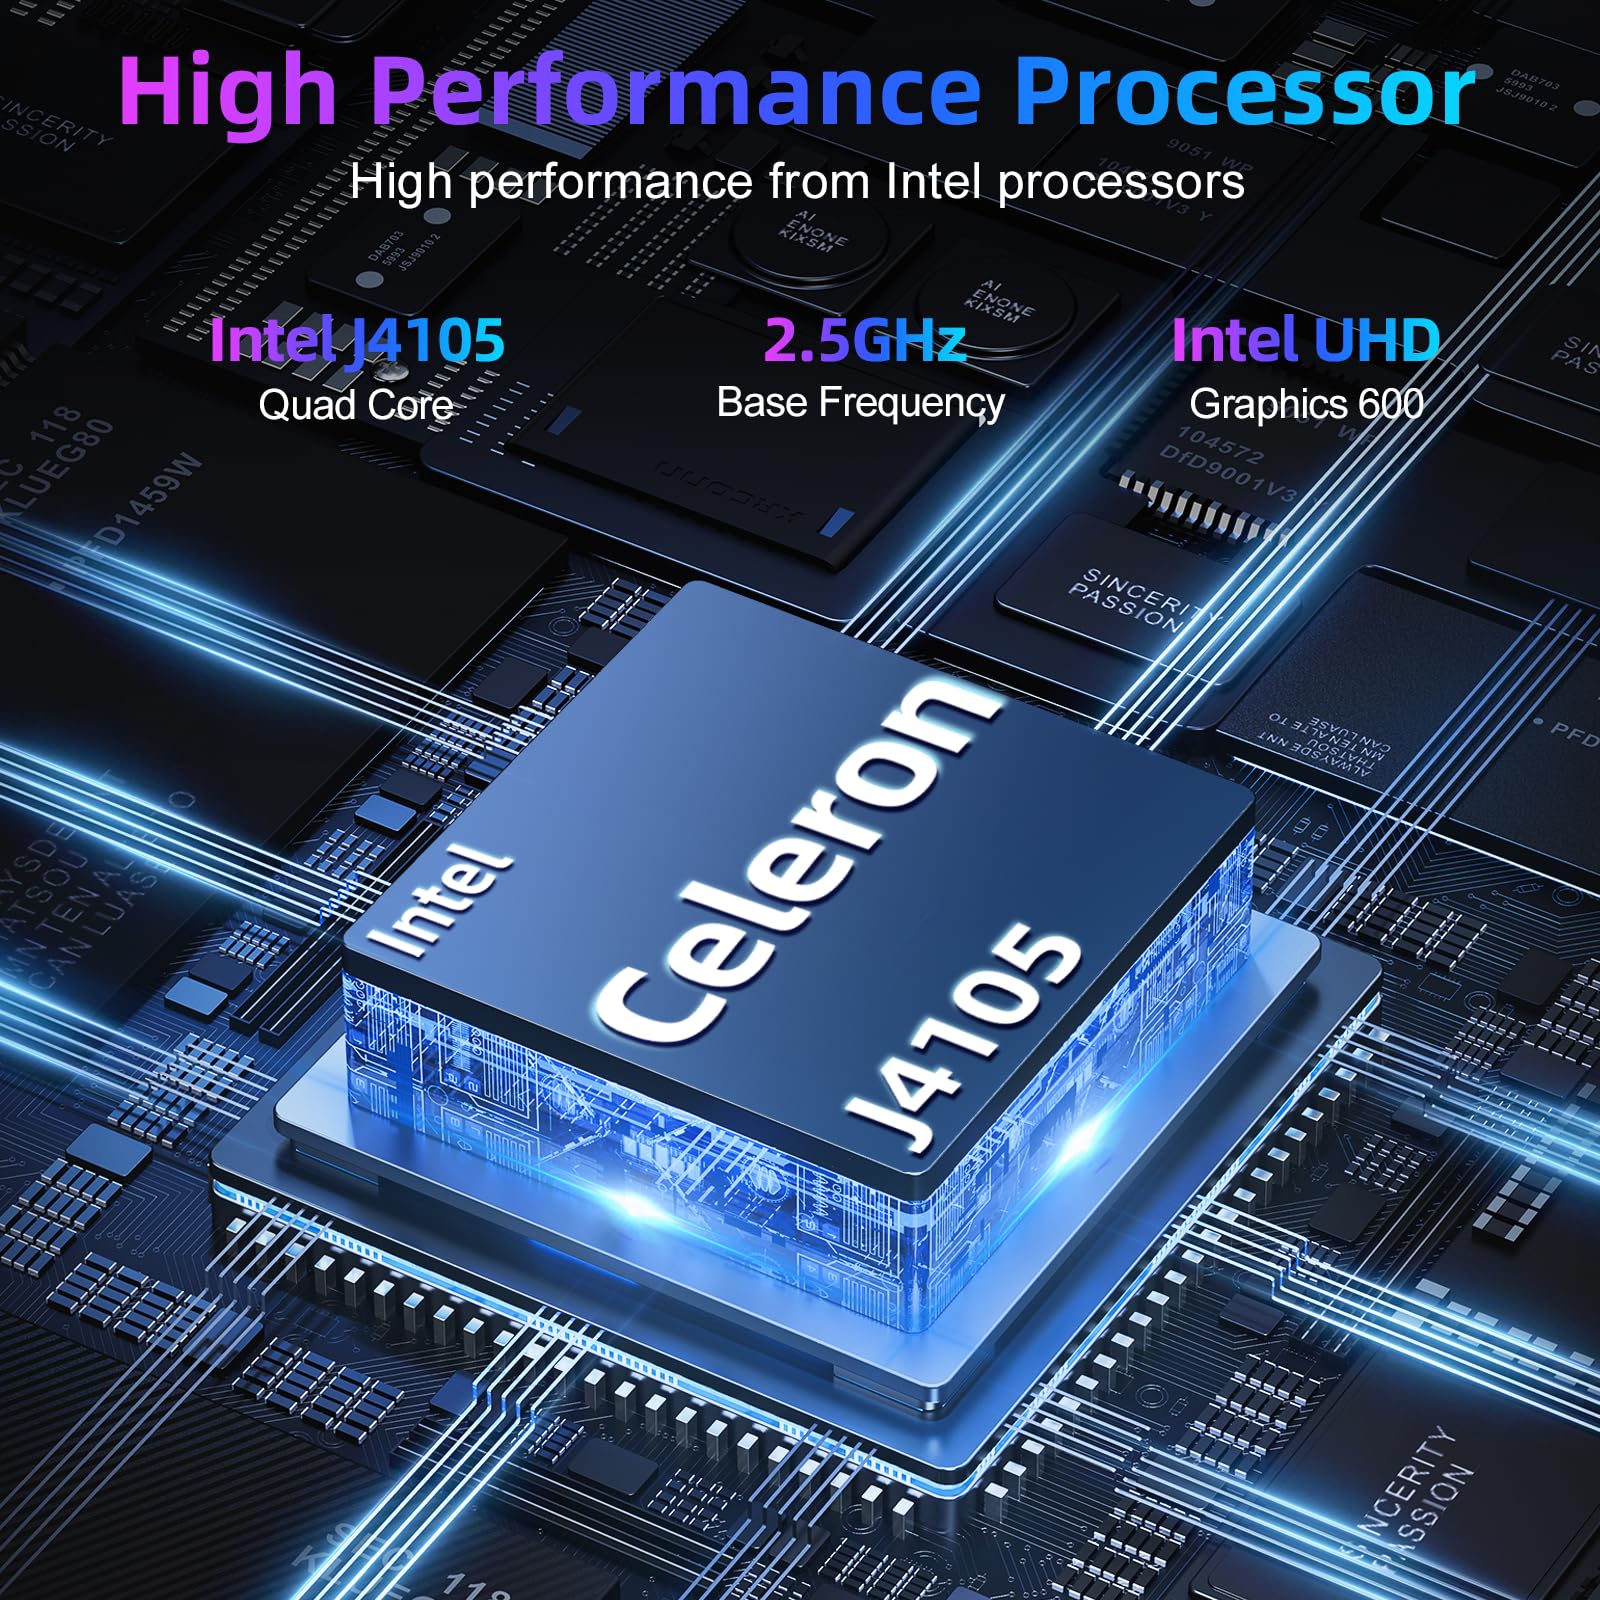 SGIN Laptop 15.6 Inch, 4GB DDR4 128GB SSD Laptops Computer with Intel Celeron Quad Core Processor, Intel UHD Graphics 600, Mini HDMI, Webcam, 2.4G/5GHz WiFi, 2*USB3.2, Bluetooth4.2